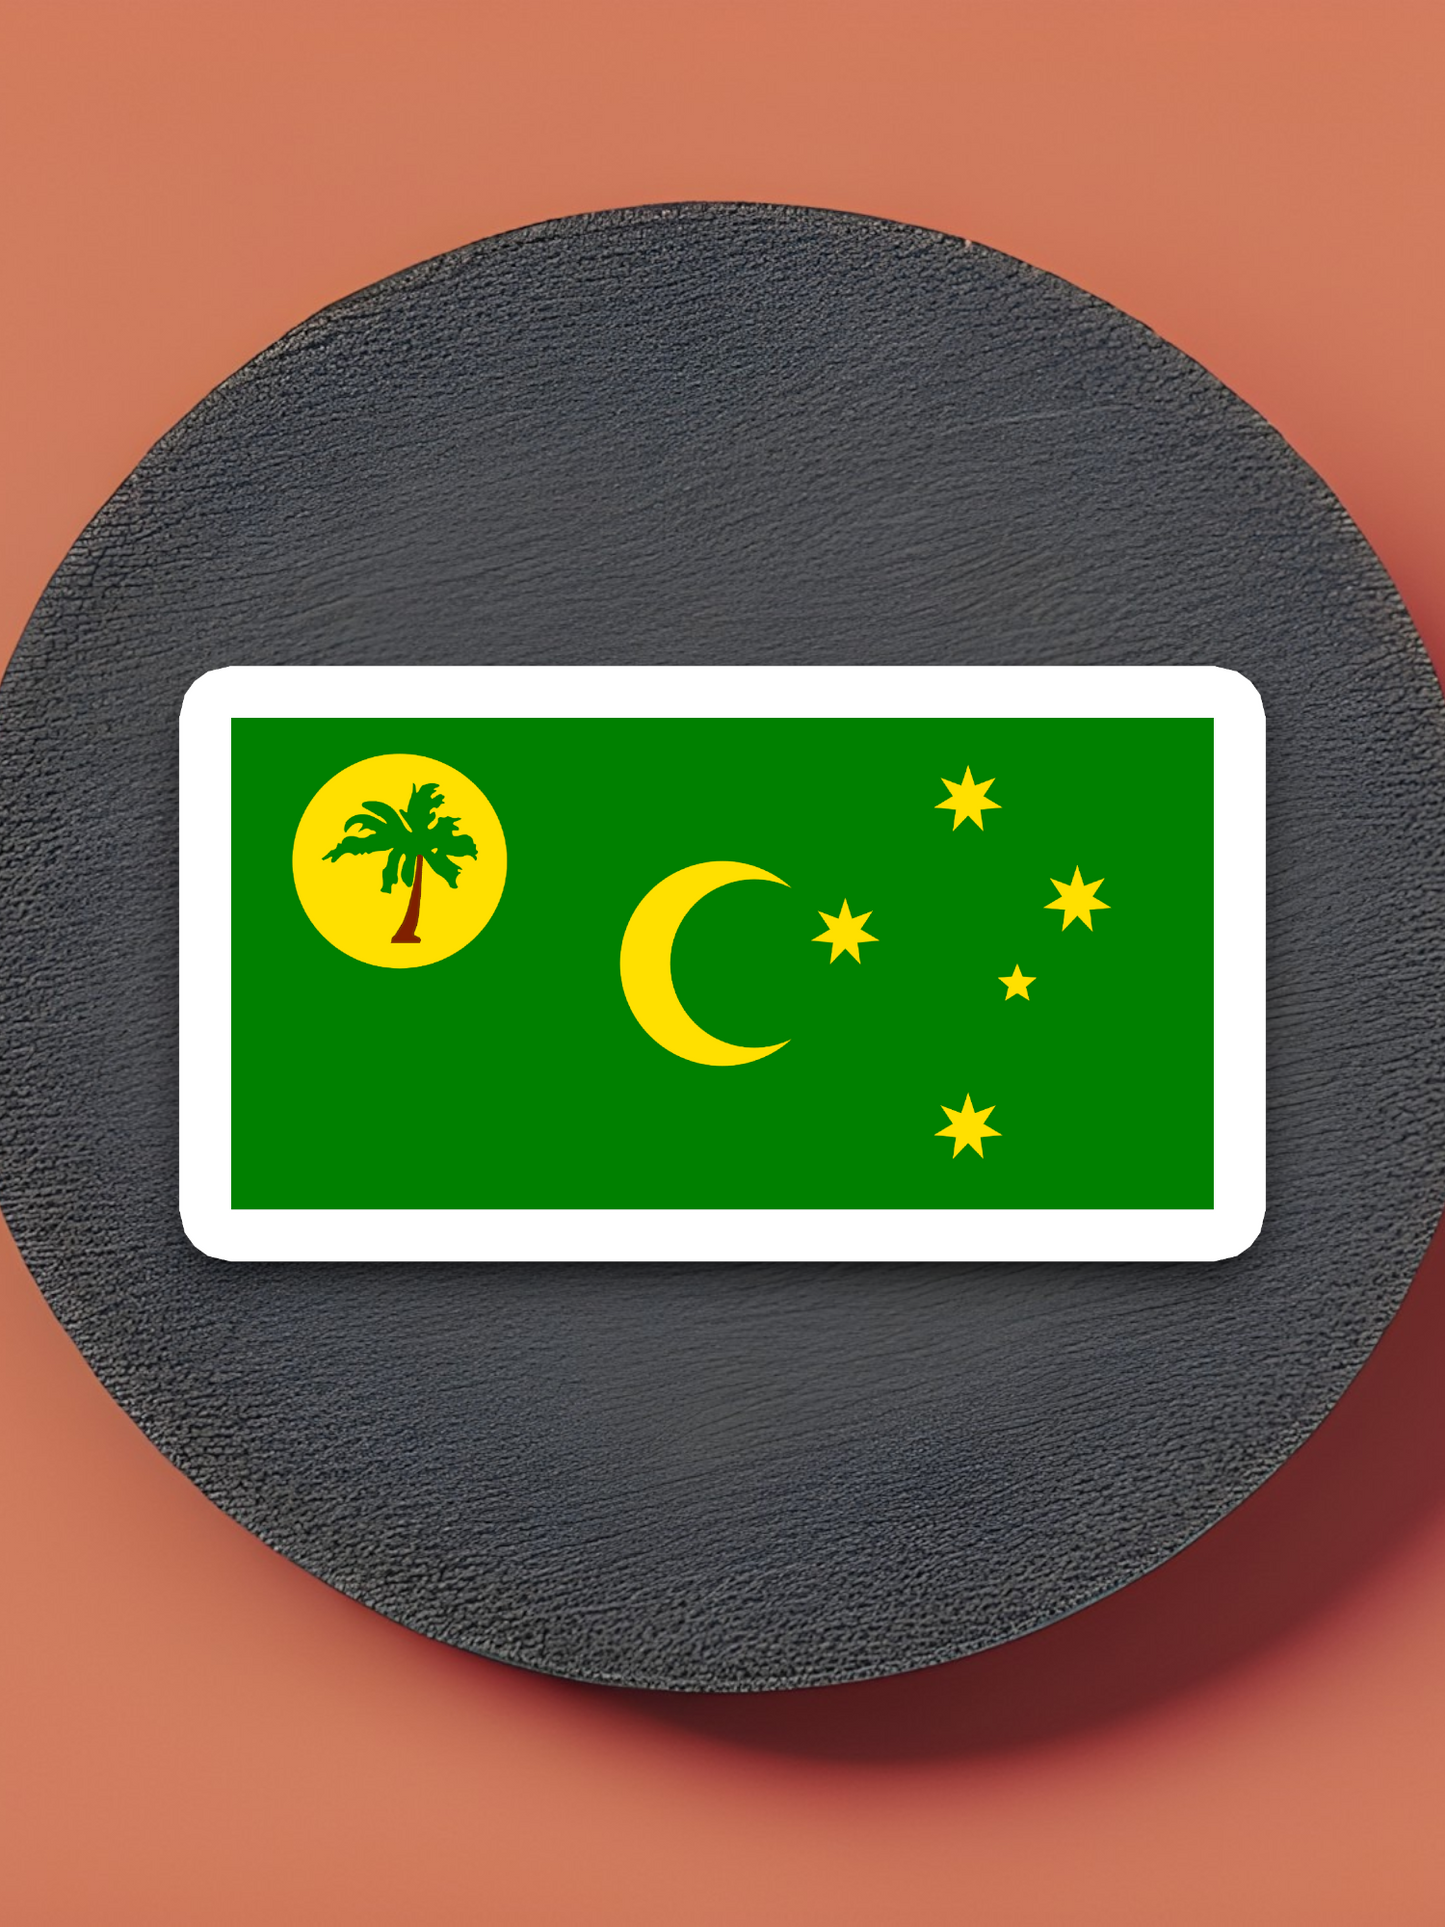 Cocos (Keeling) Islands Flag - International Country Flag Sticker